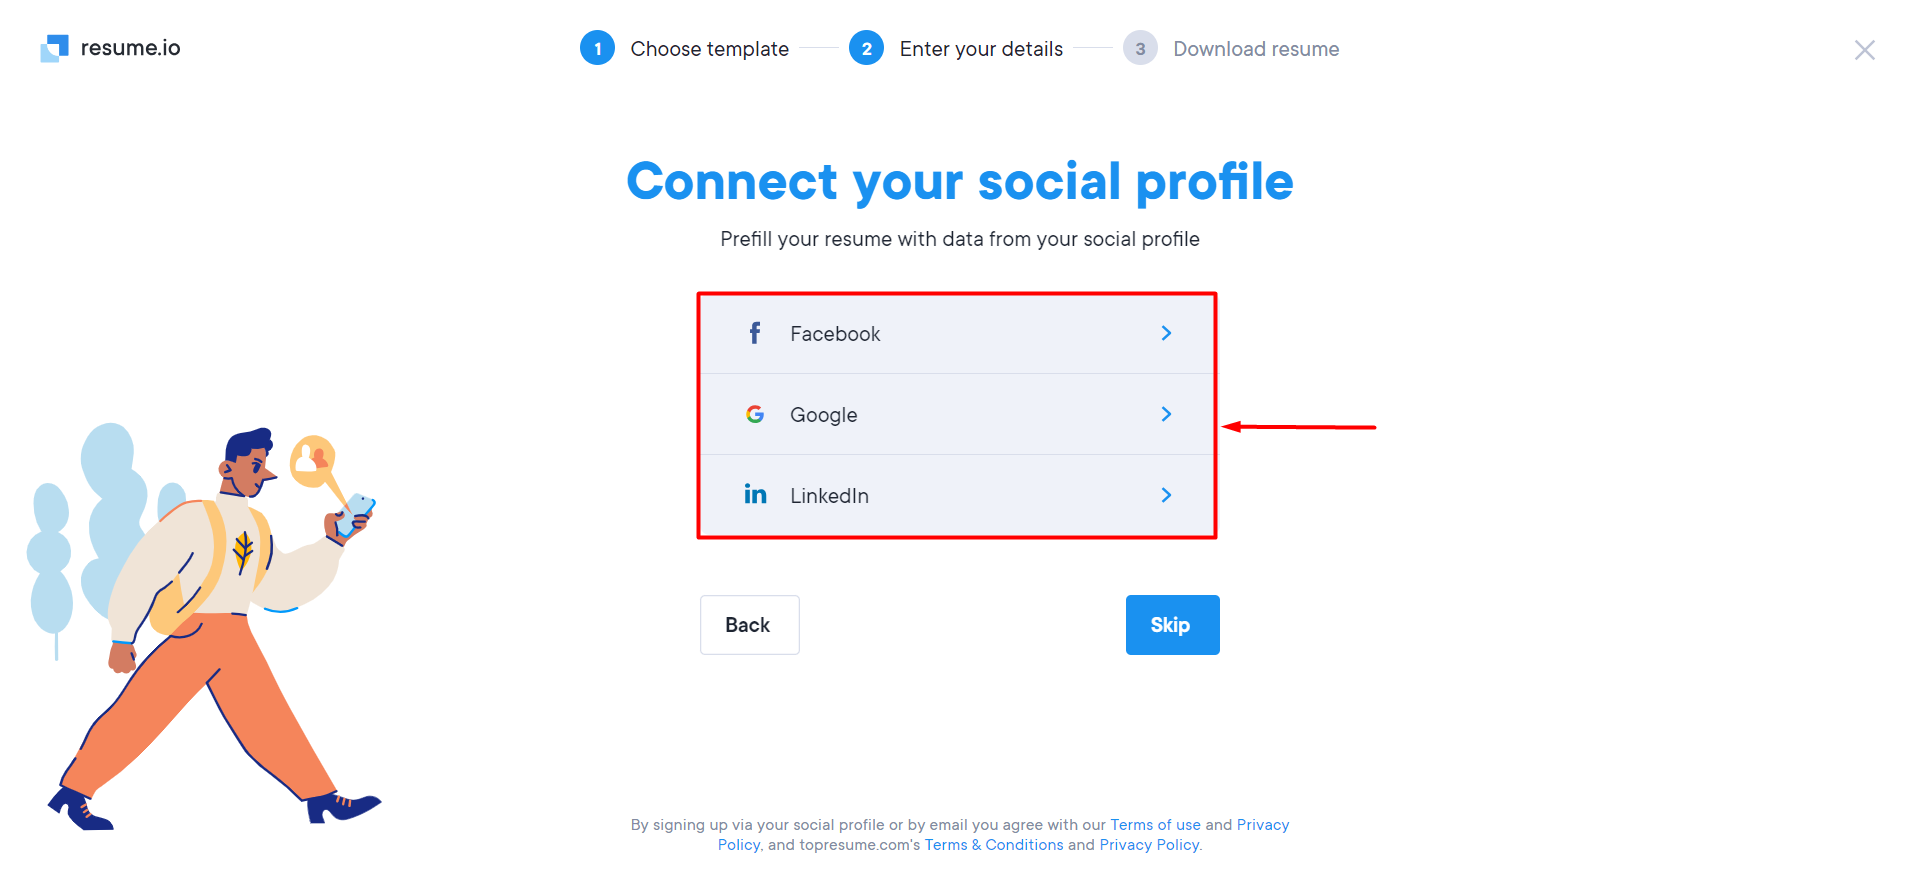 Resume.io connect social profile